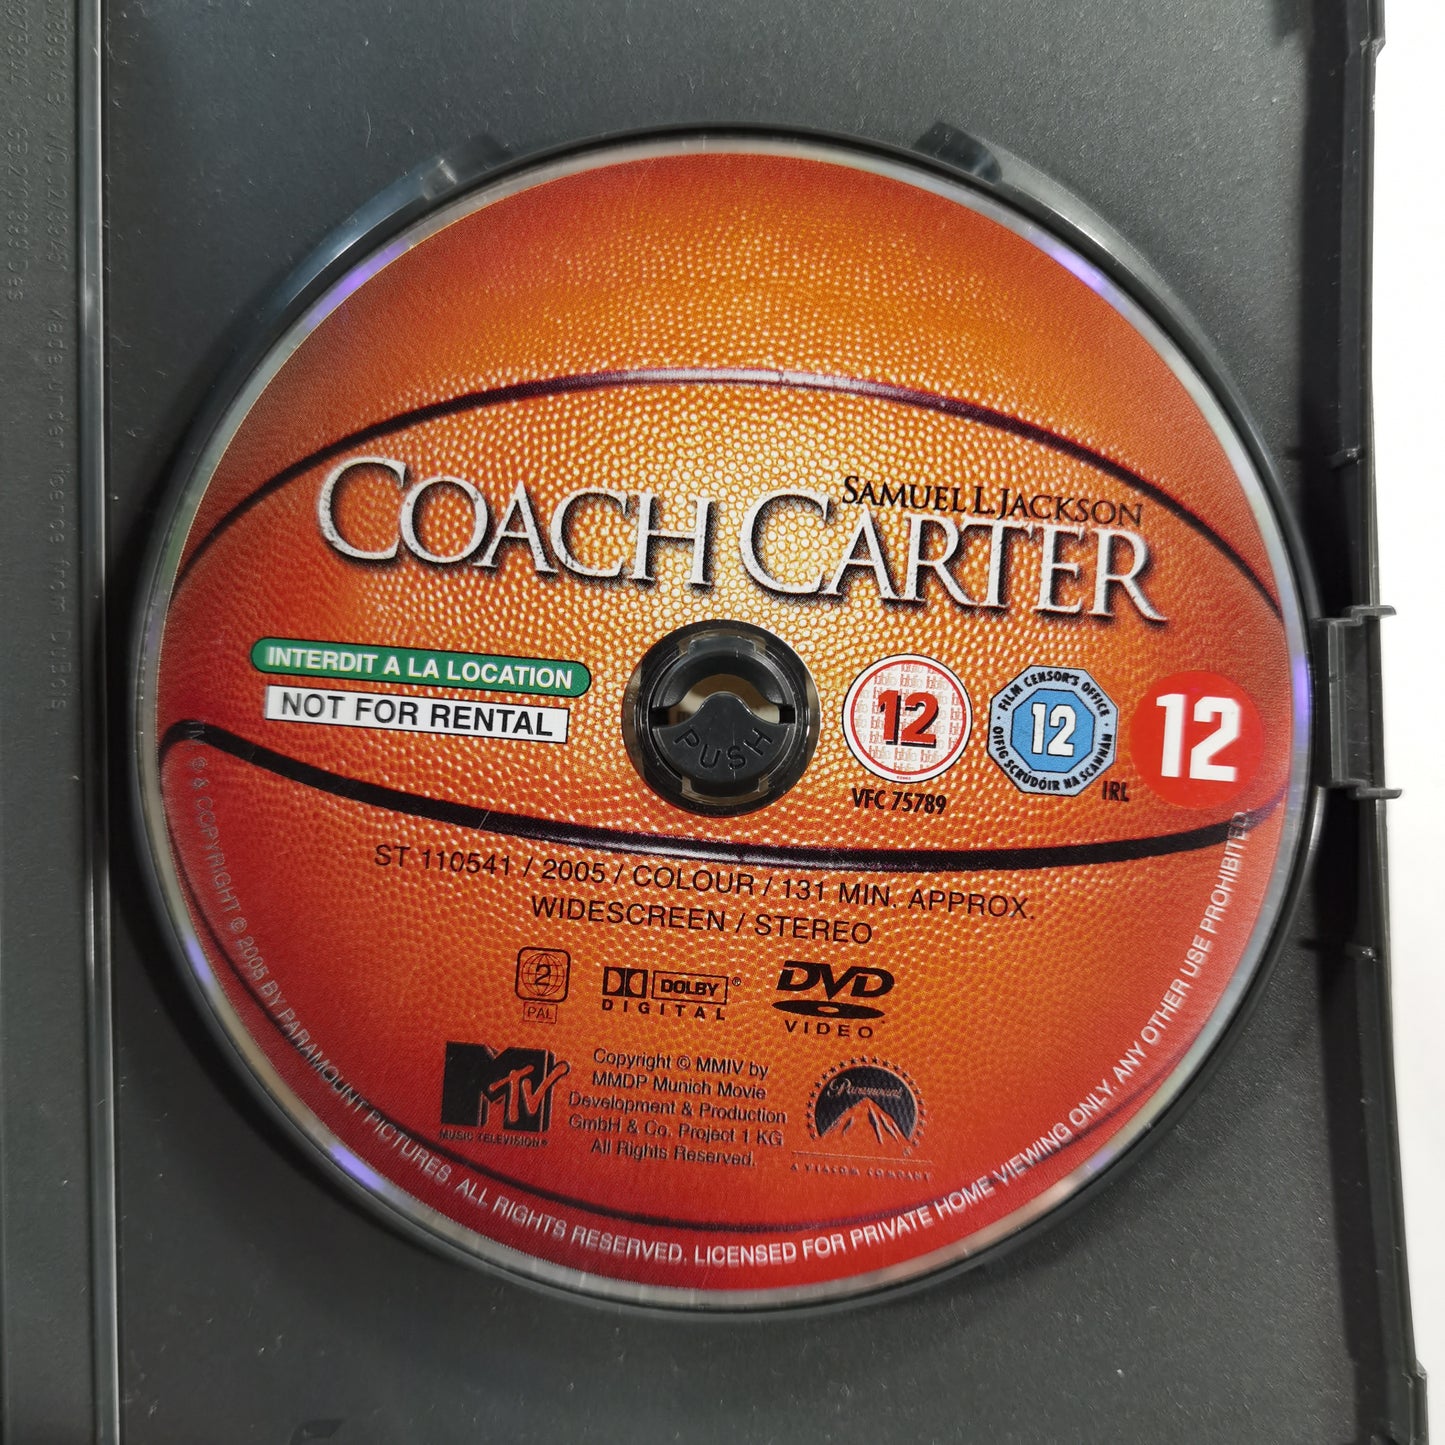 Coach Carter (2003) - DVD UK 2005 ( Cover PHE 8768 )